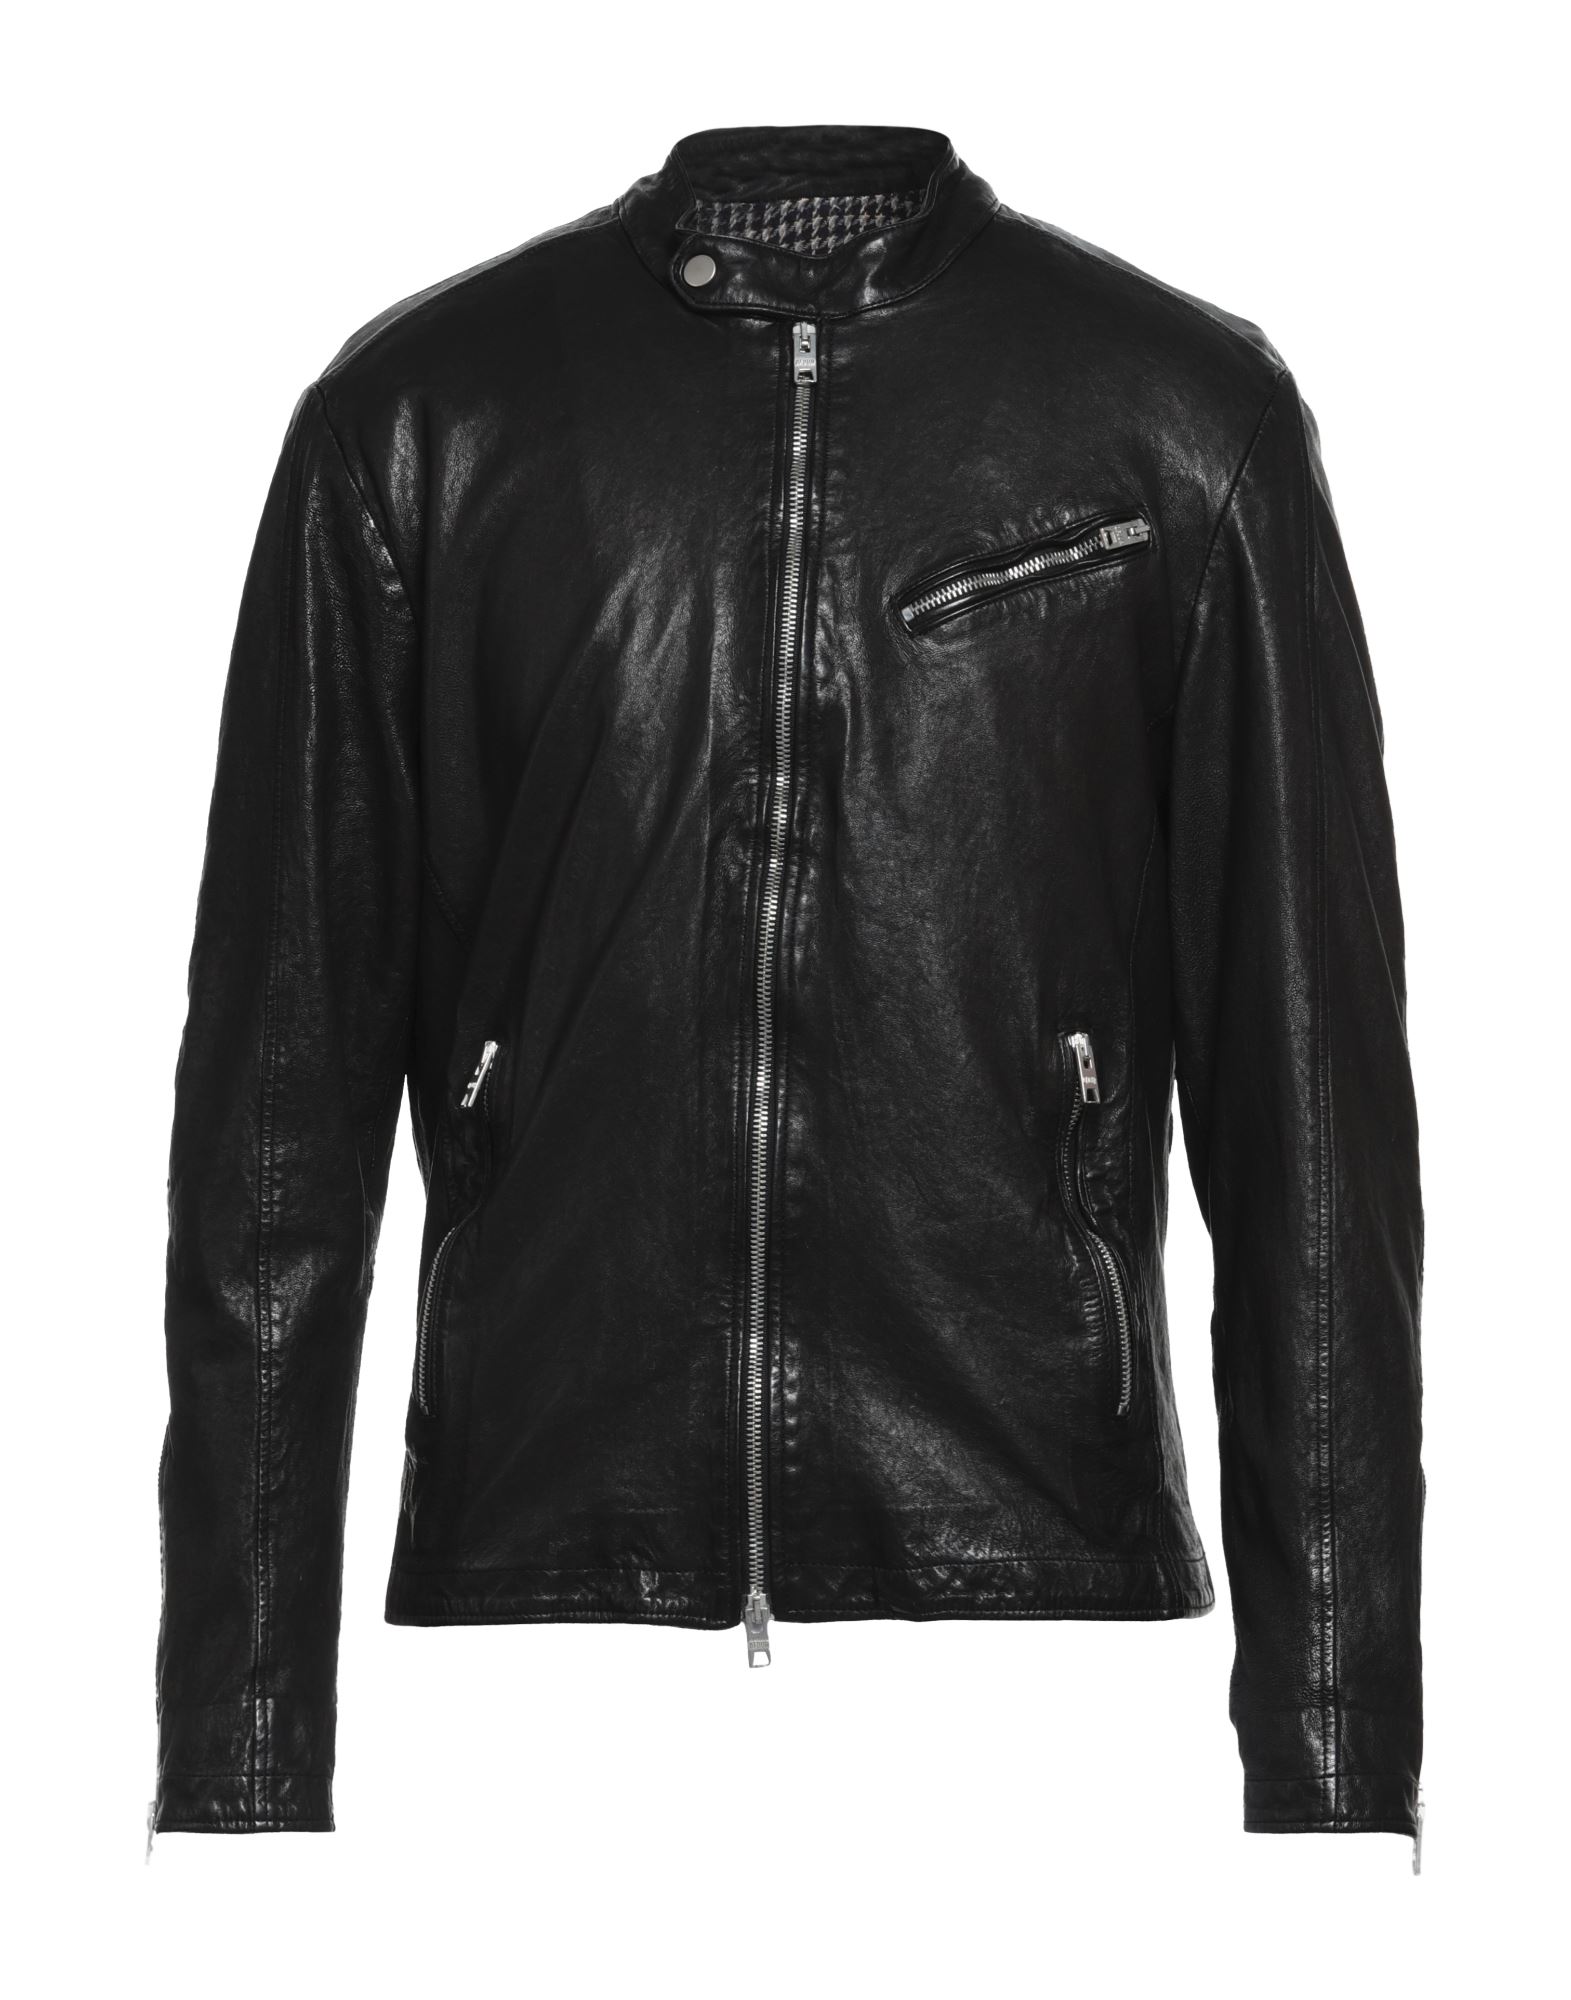 Shop Dfour Man Jacket Black Size 44 Soft Leather